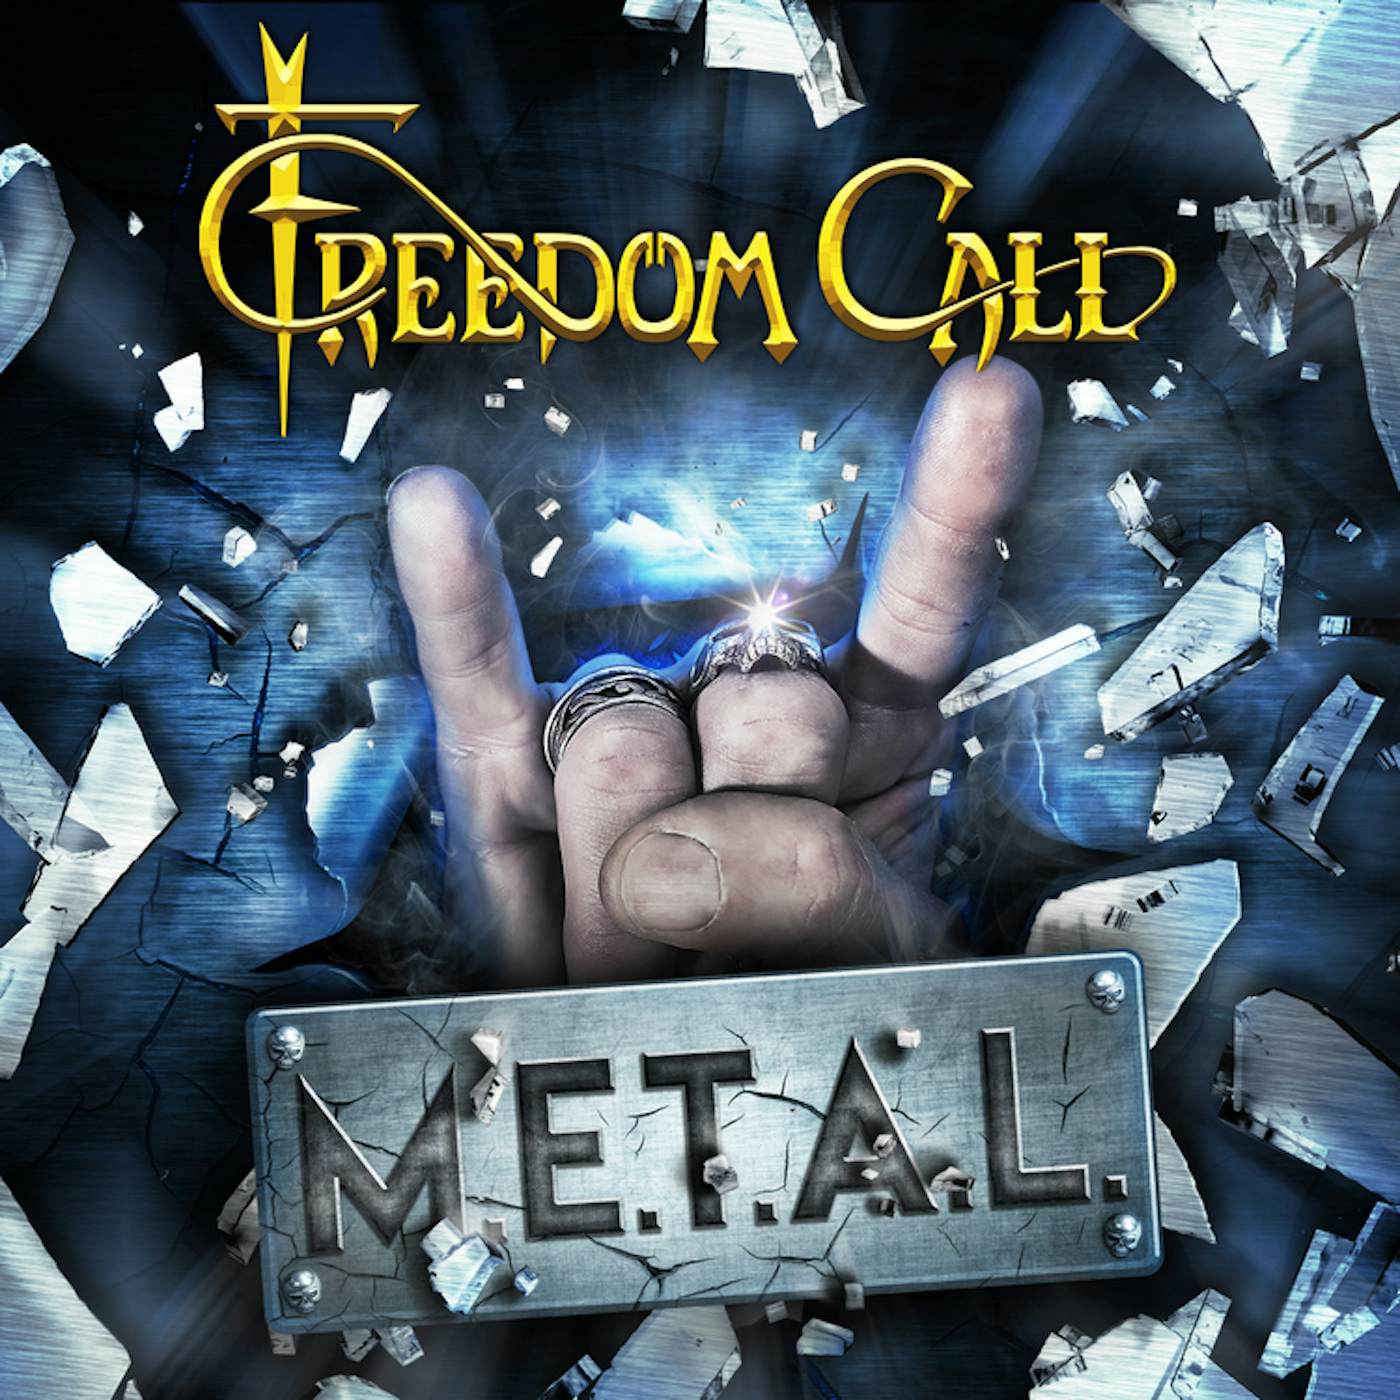 Freedom Call M.E.T.A.L. CD